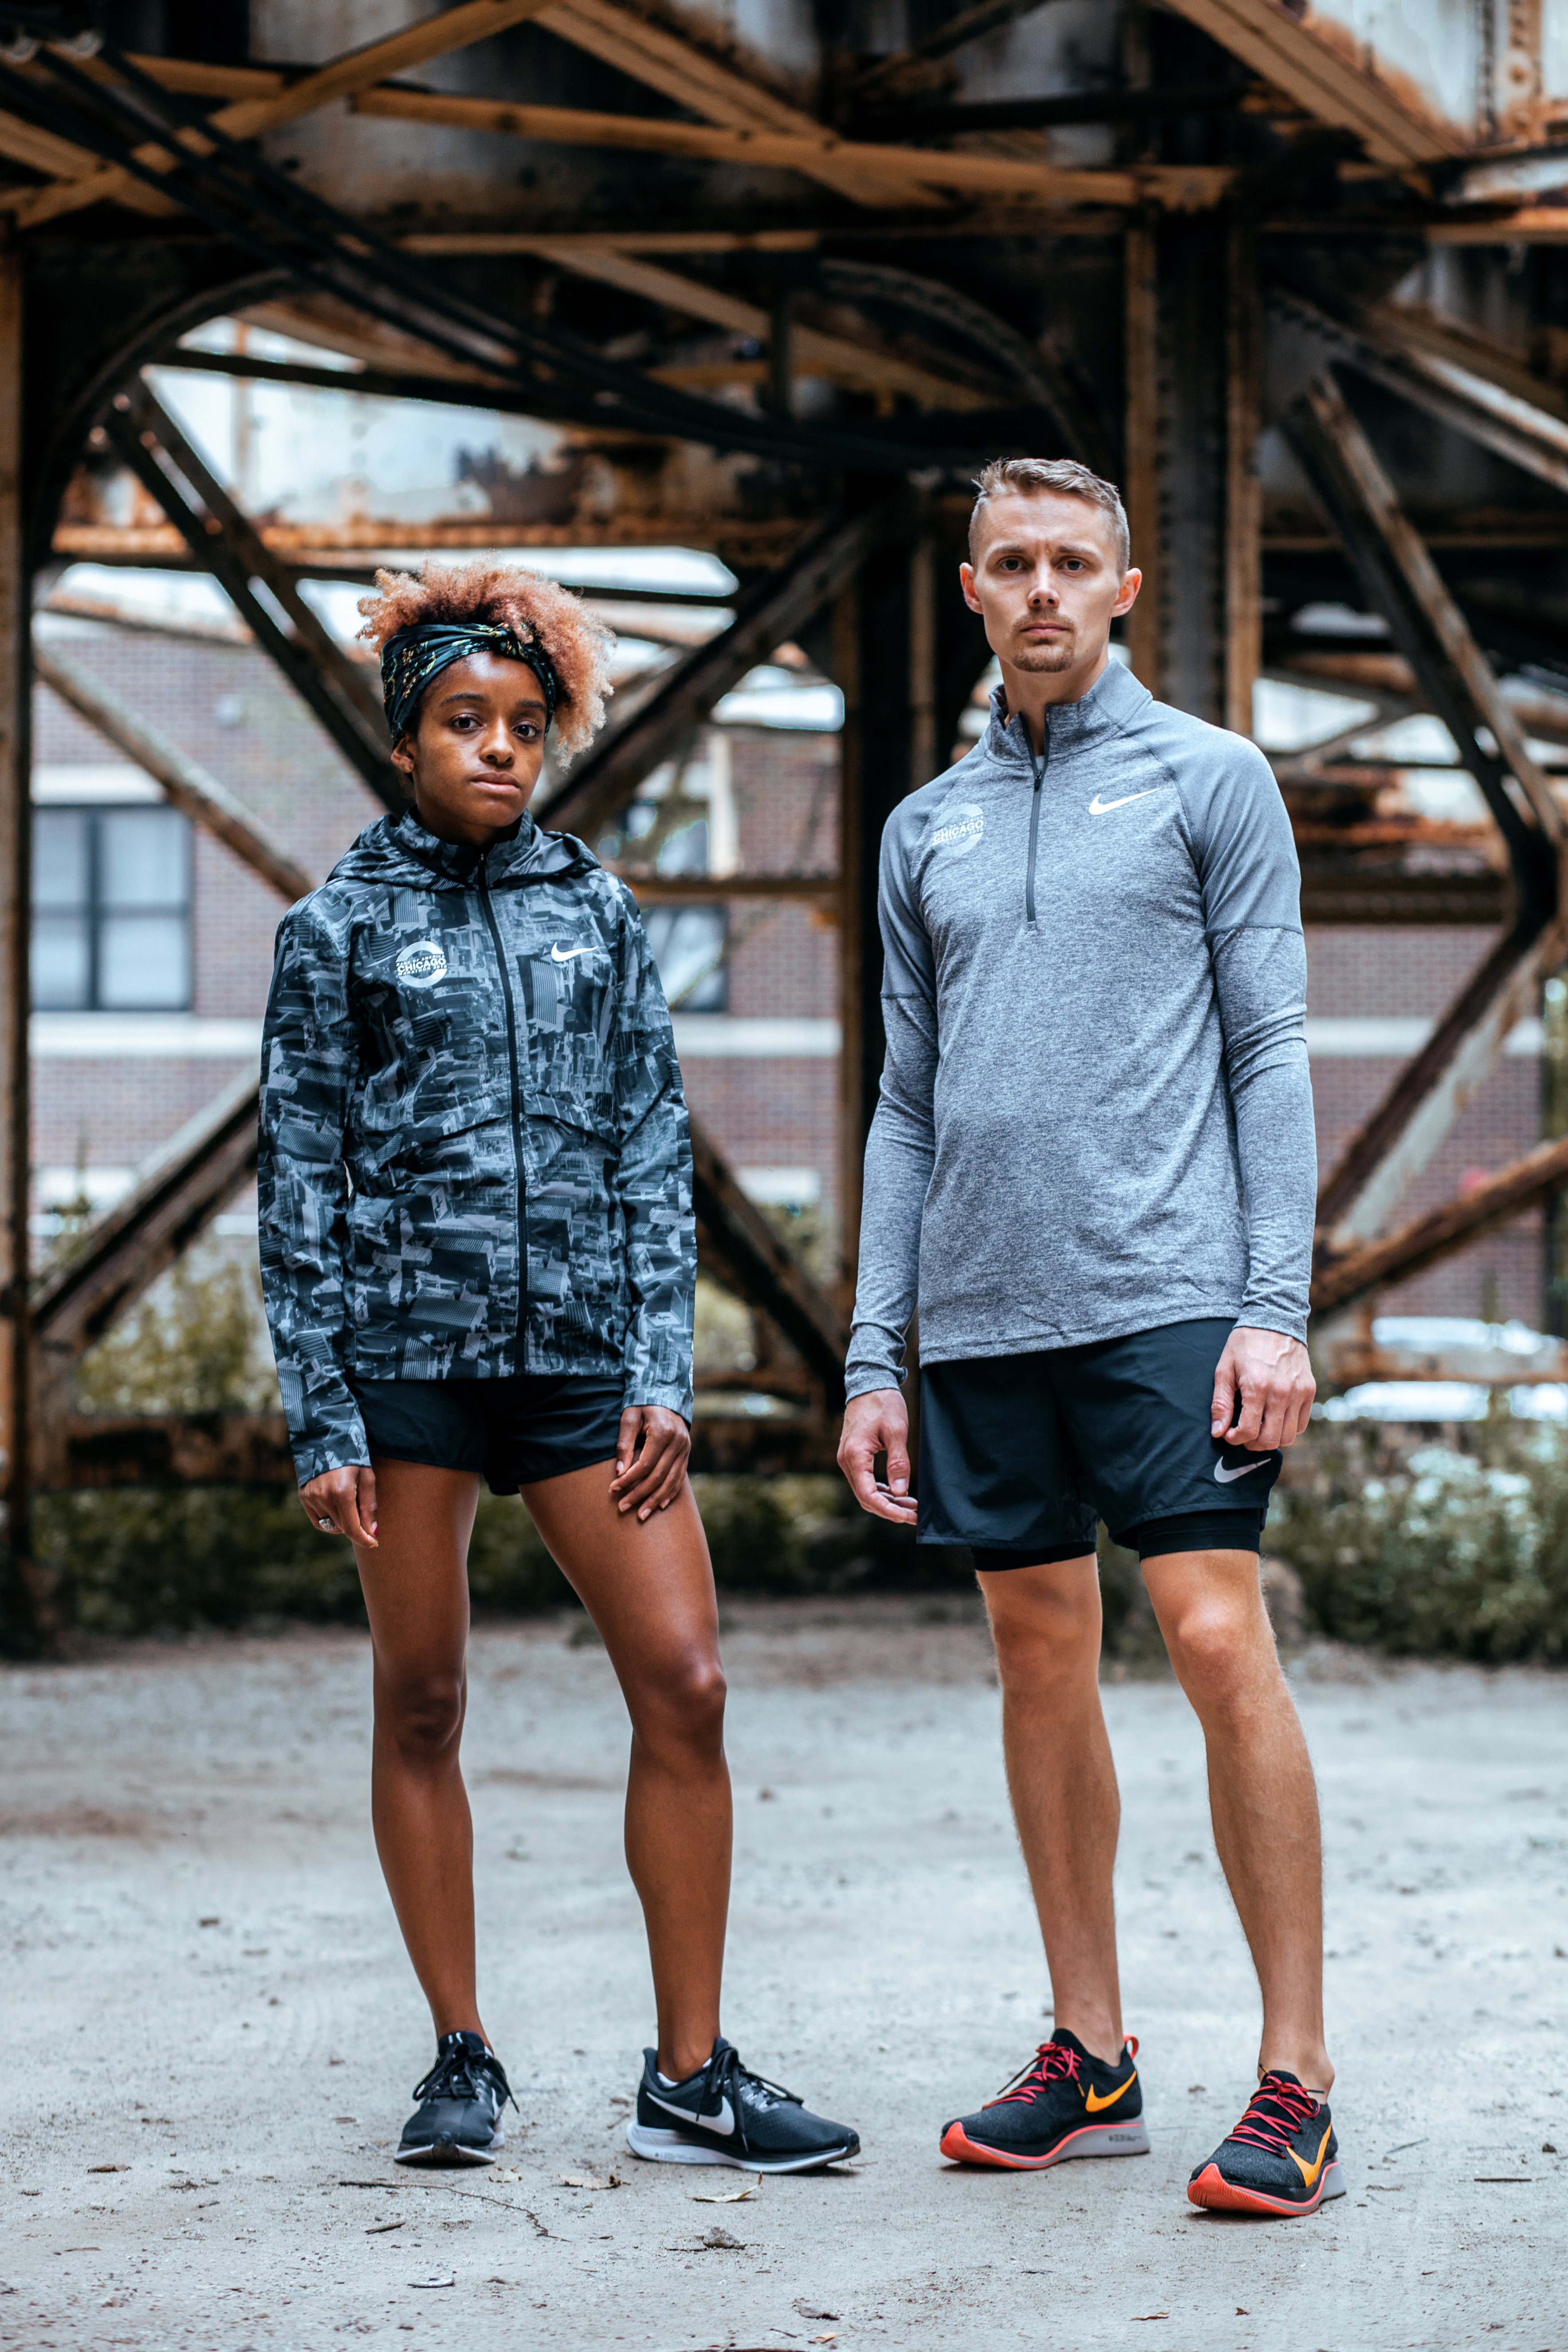 Terminologie Koel Accor It's Here, Nike's 2018 Official Bank of America Chicago Marathon Merchandise